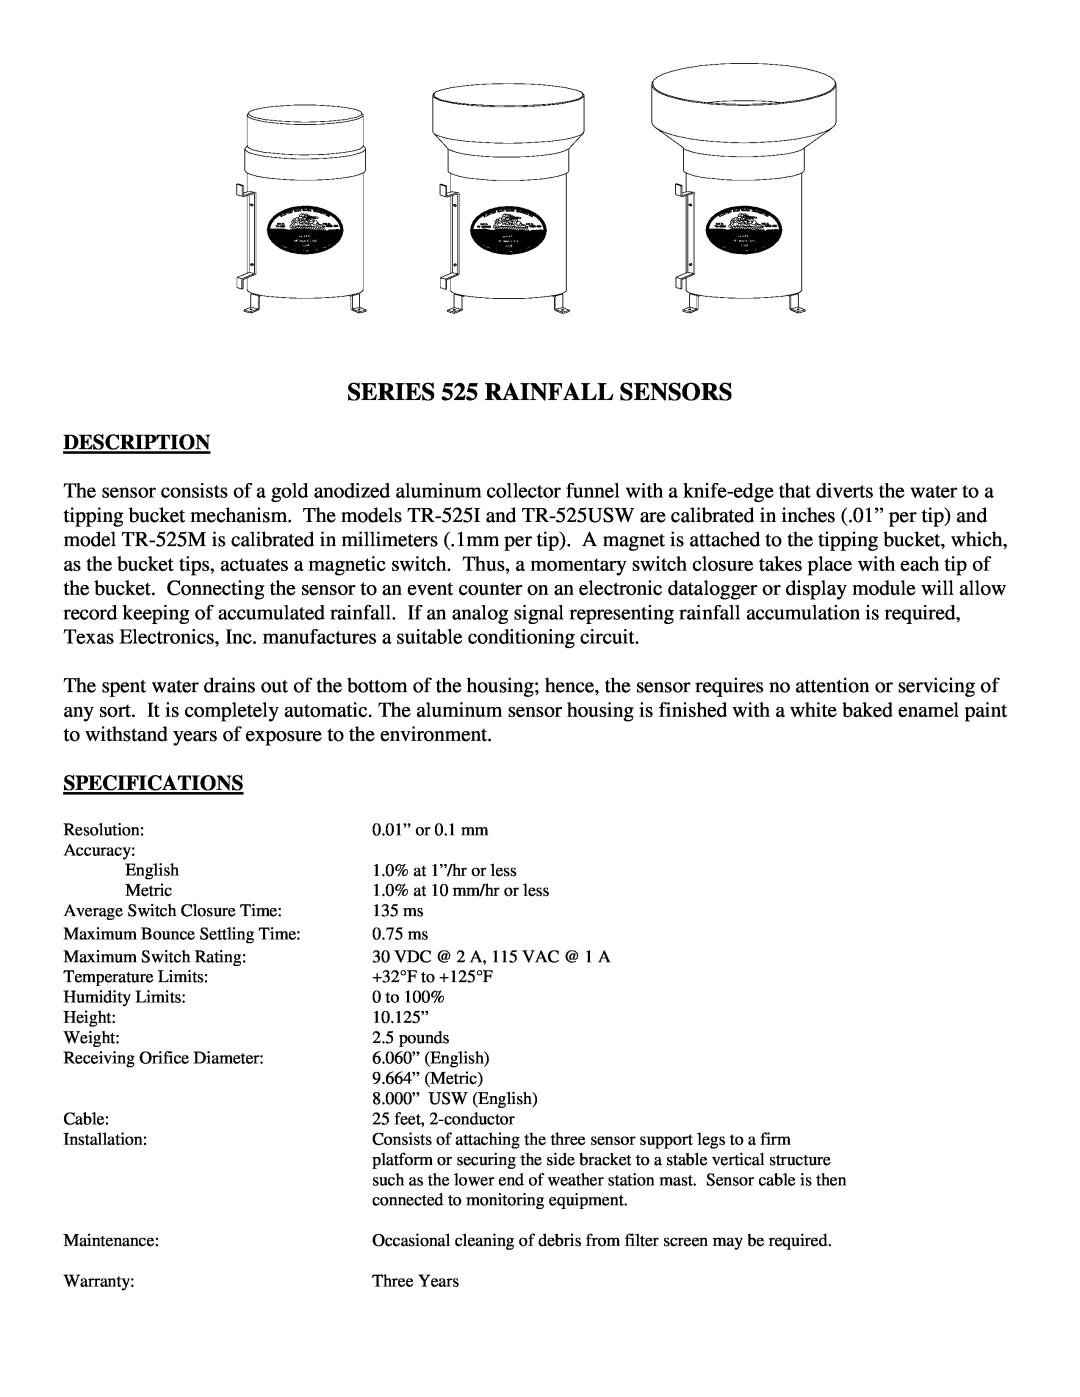 Texas Instruments SERIES 525 RAINFALL SENSORS, TR-525I, TR-525USW user manual Description, Specifications 